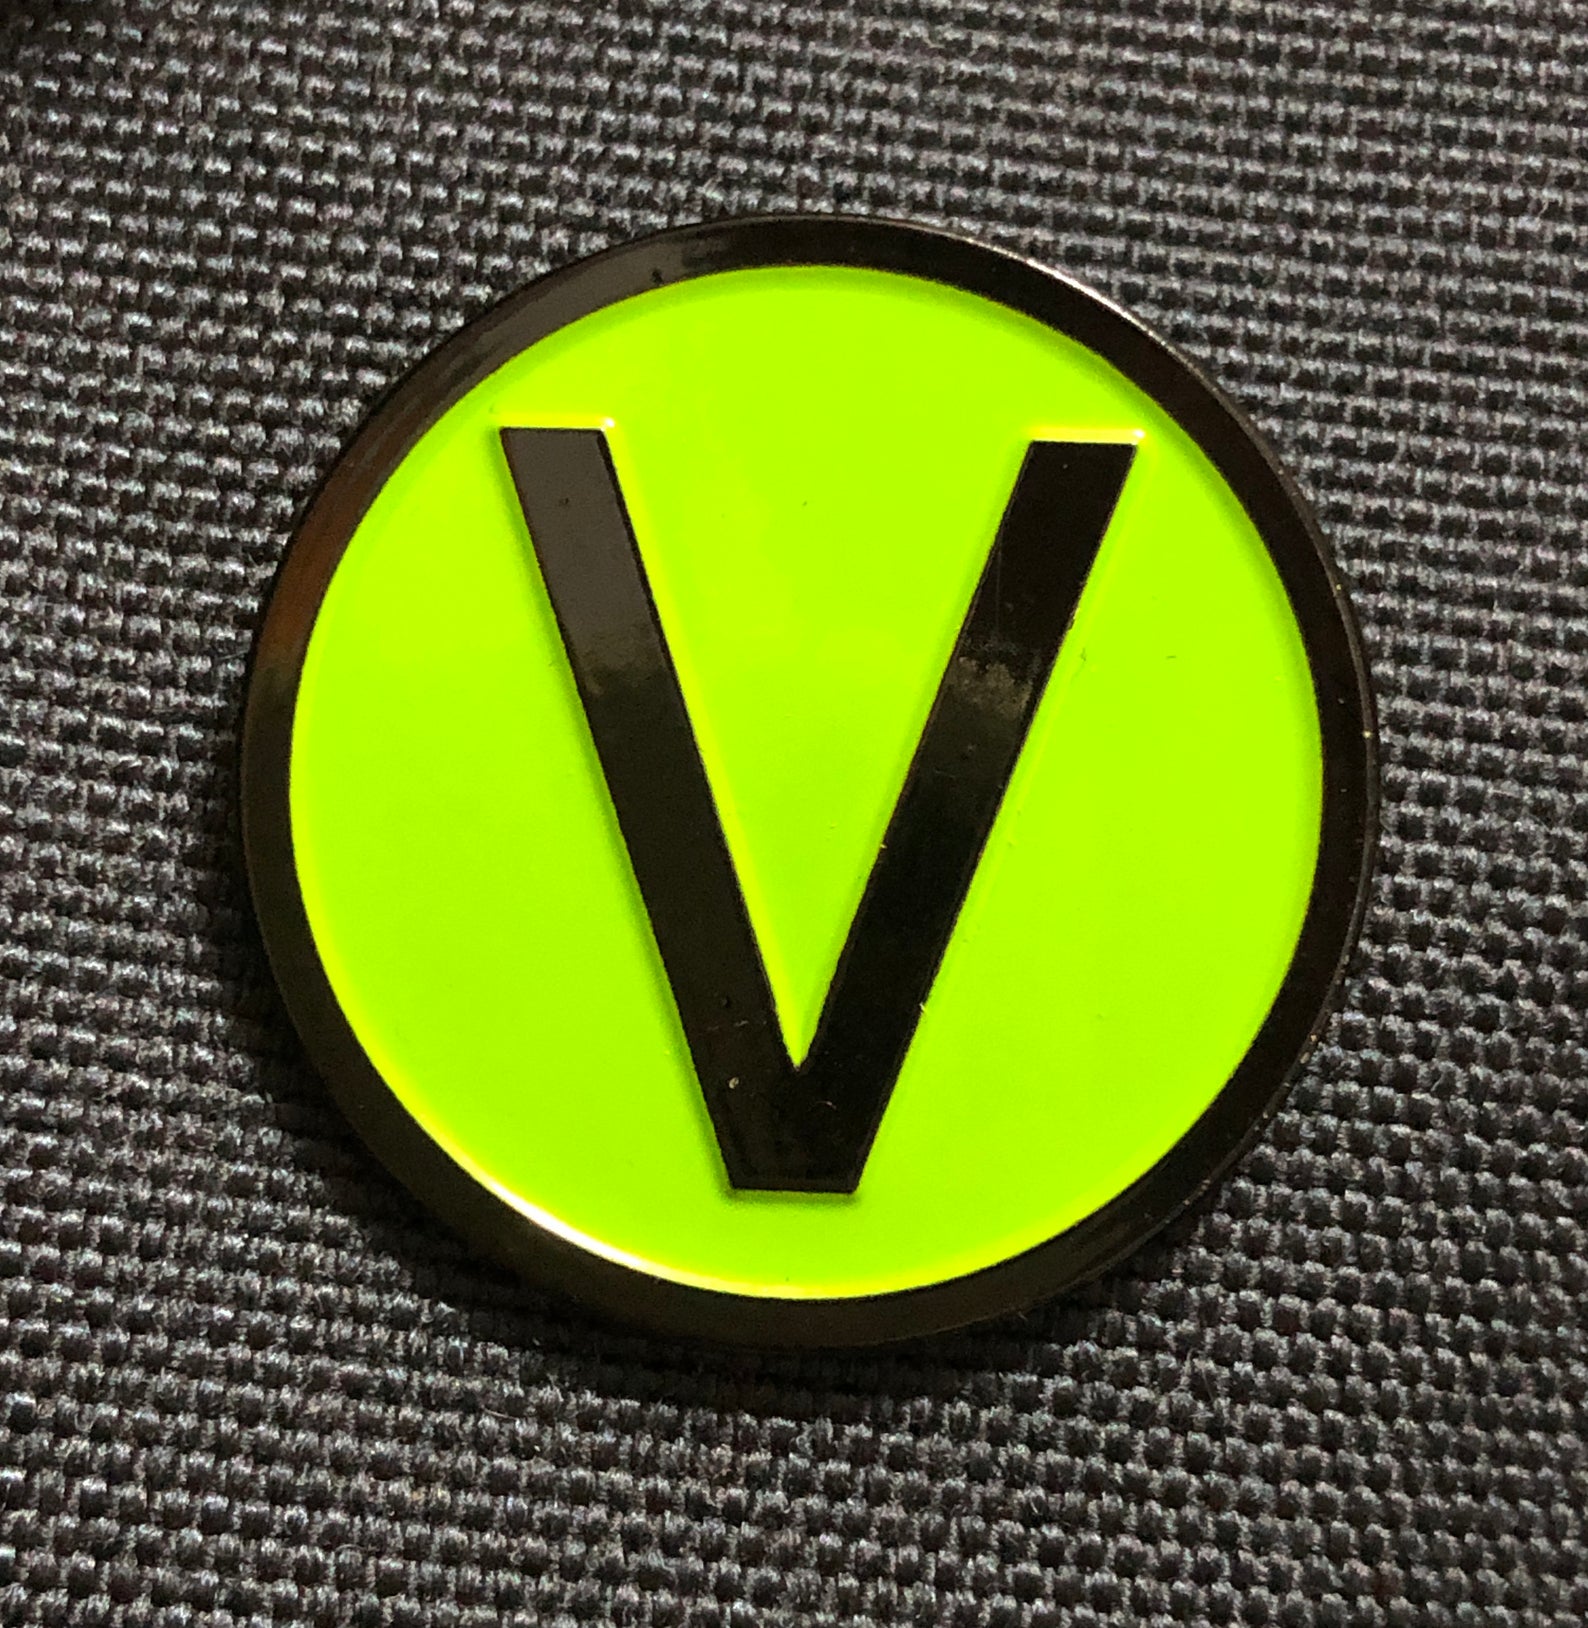 Green V Pin